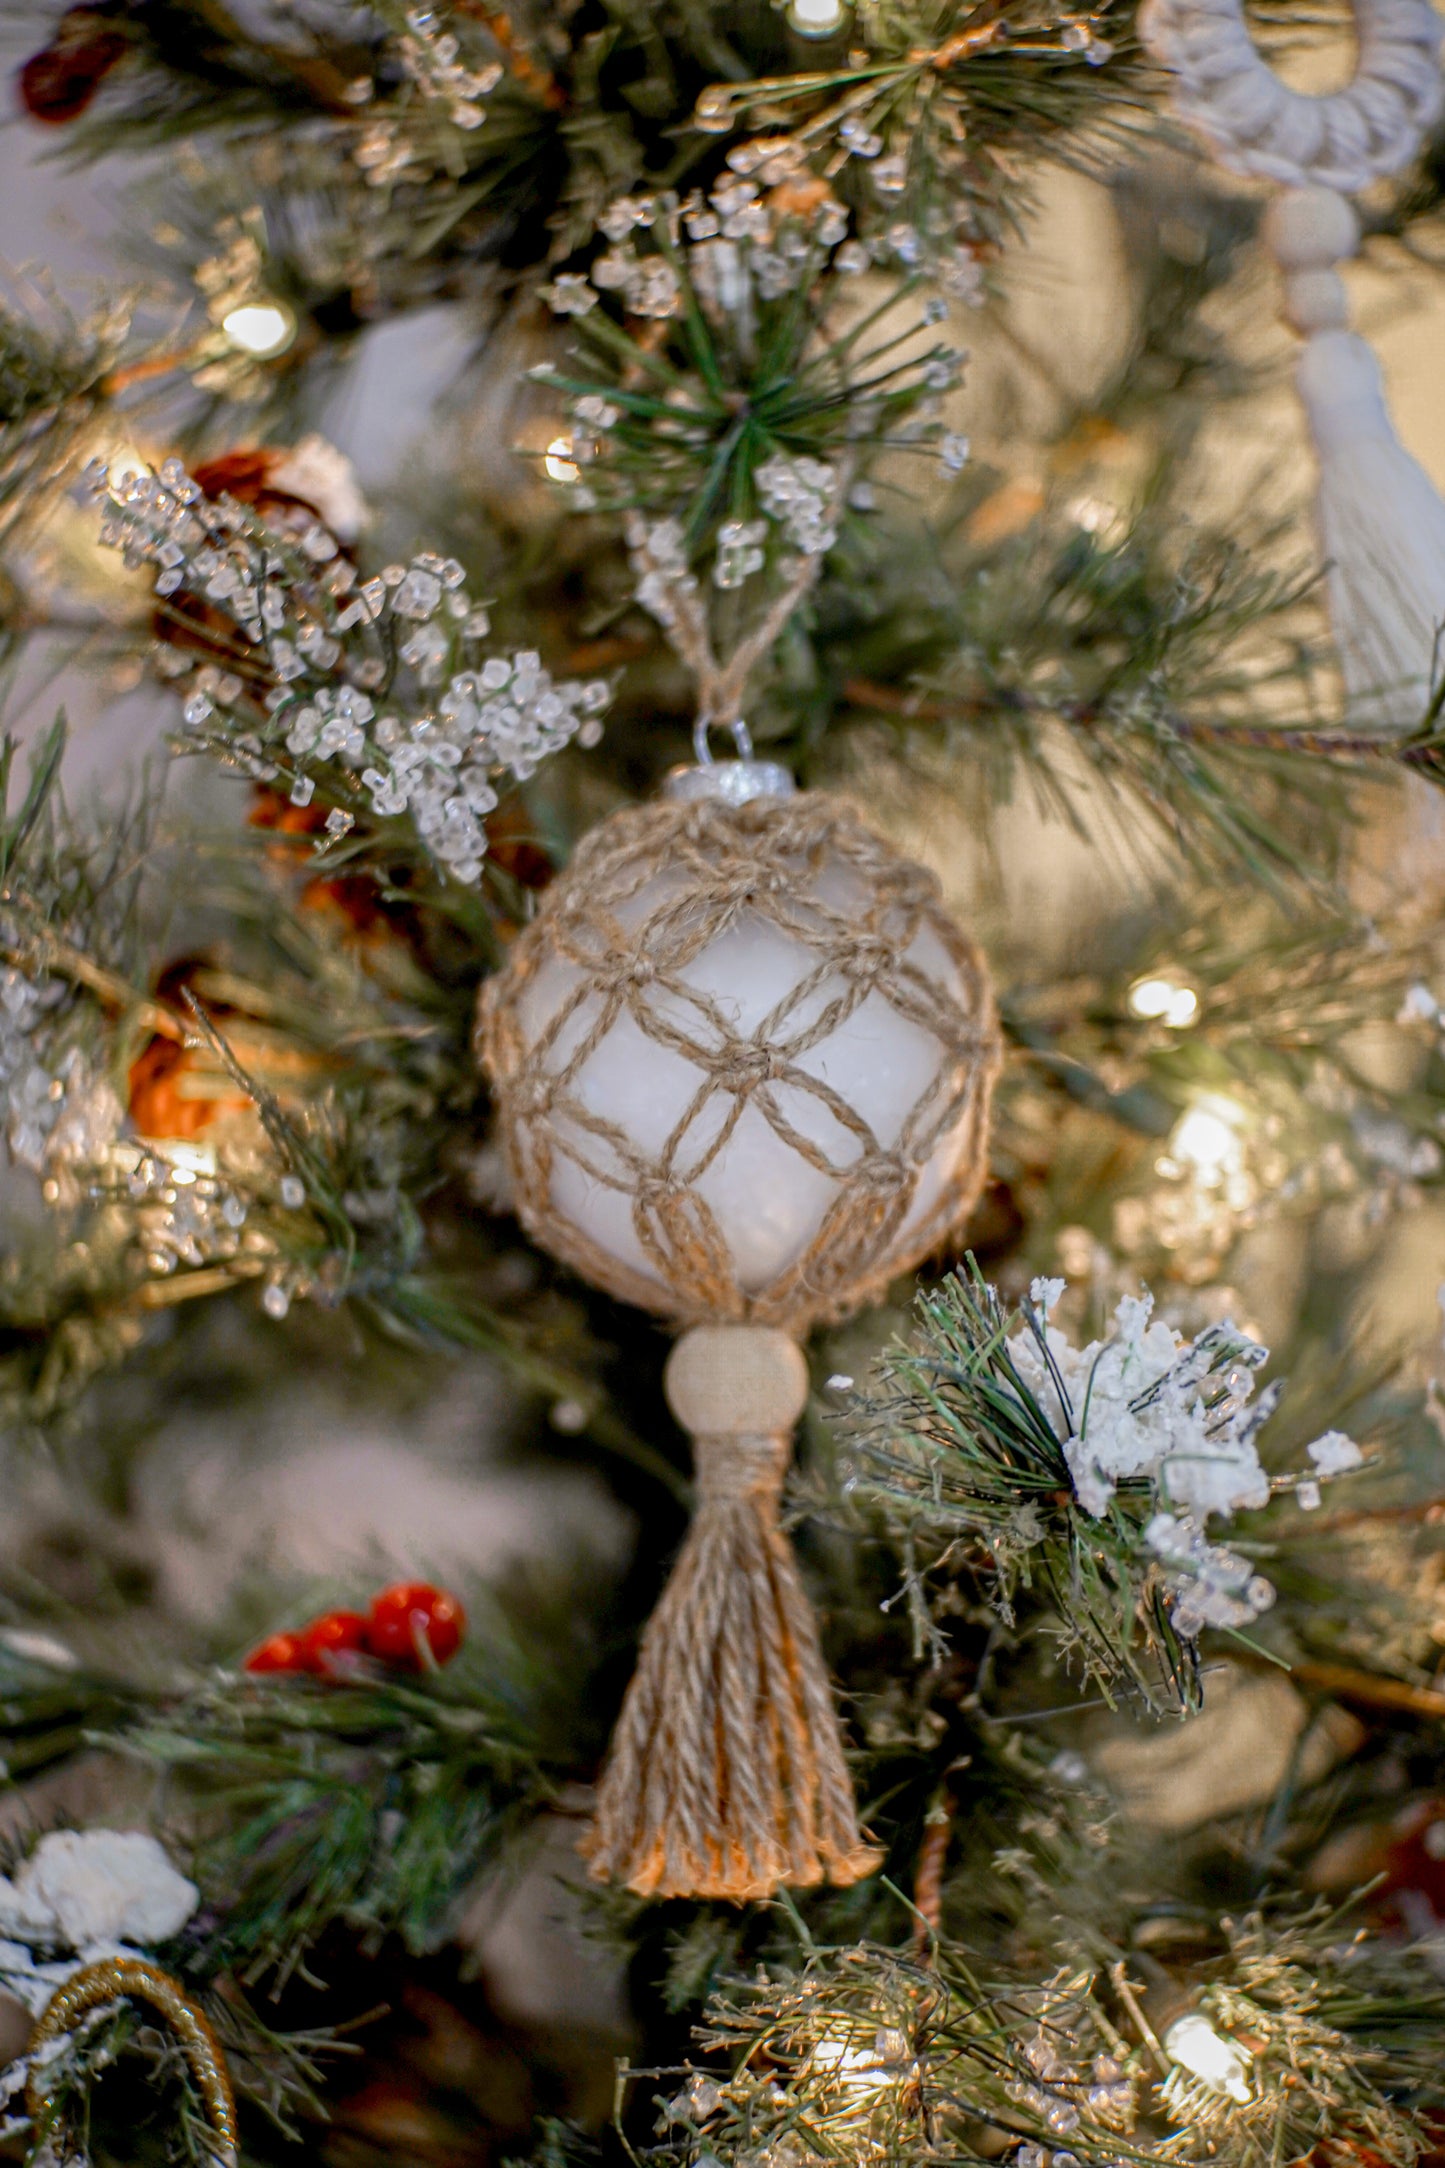 Macrame Wrapped Jute Ornaments